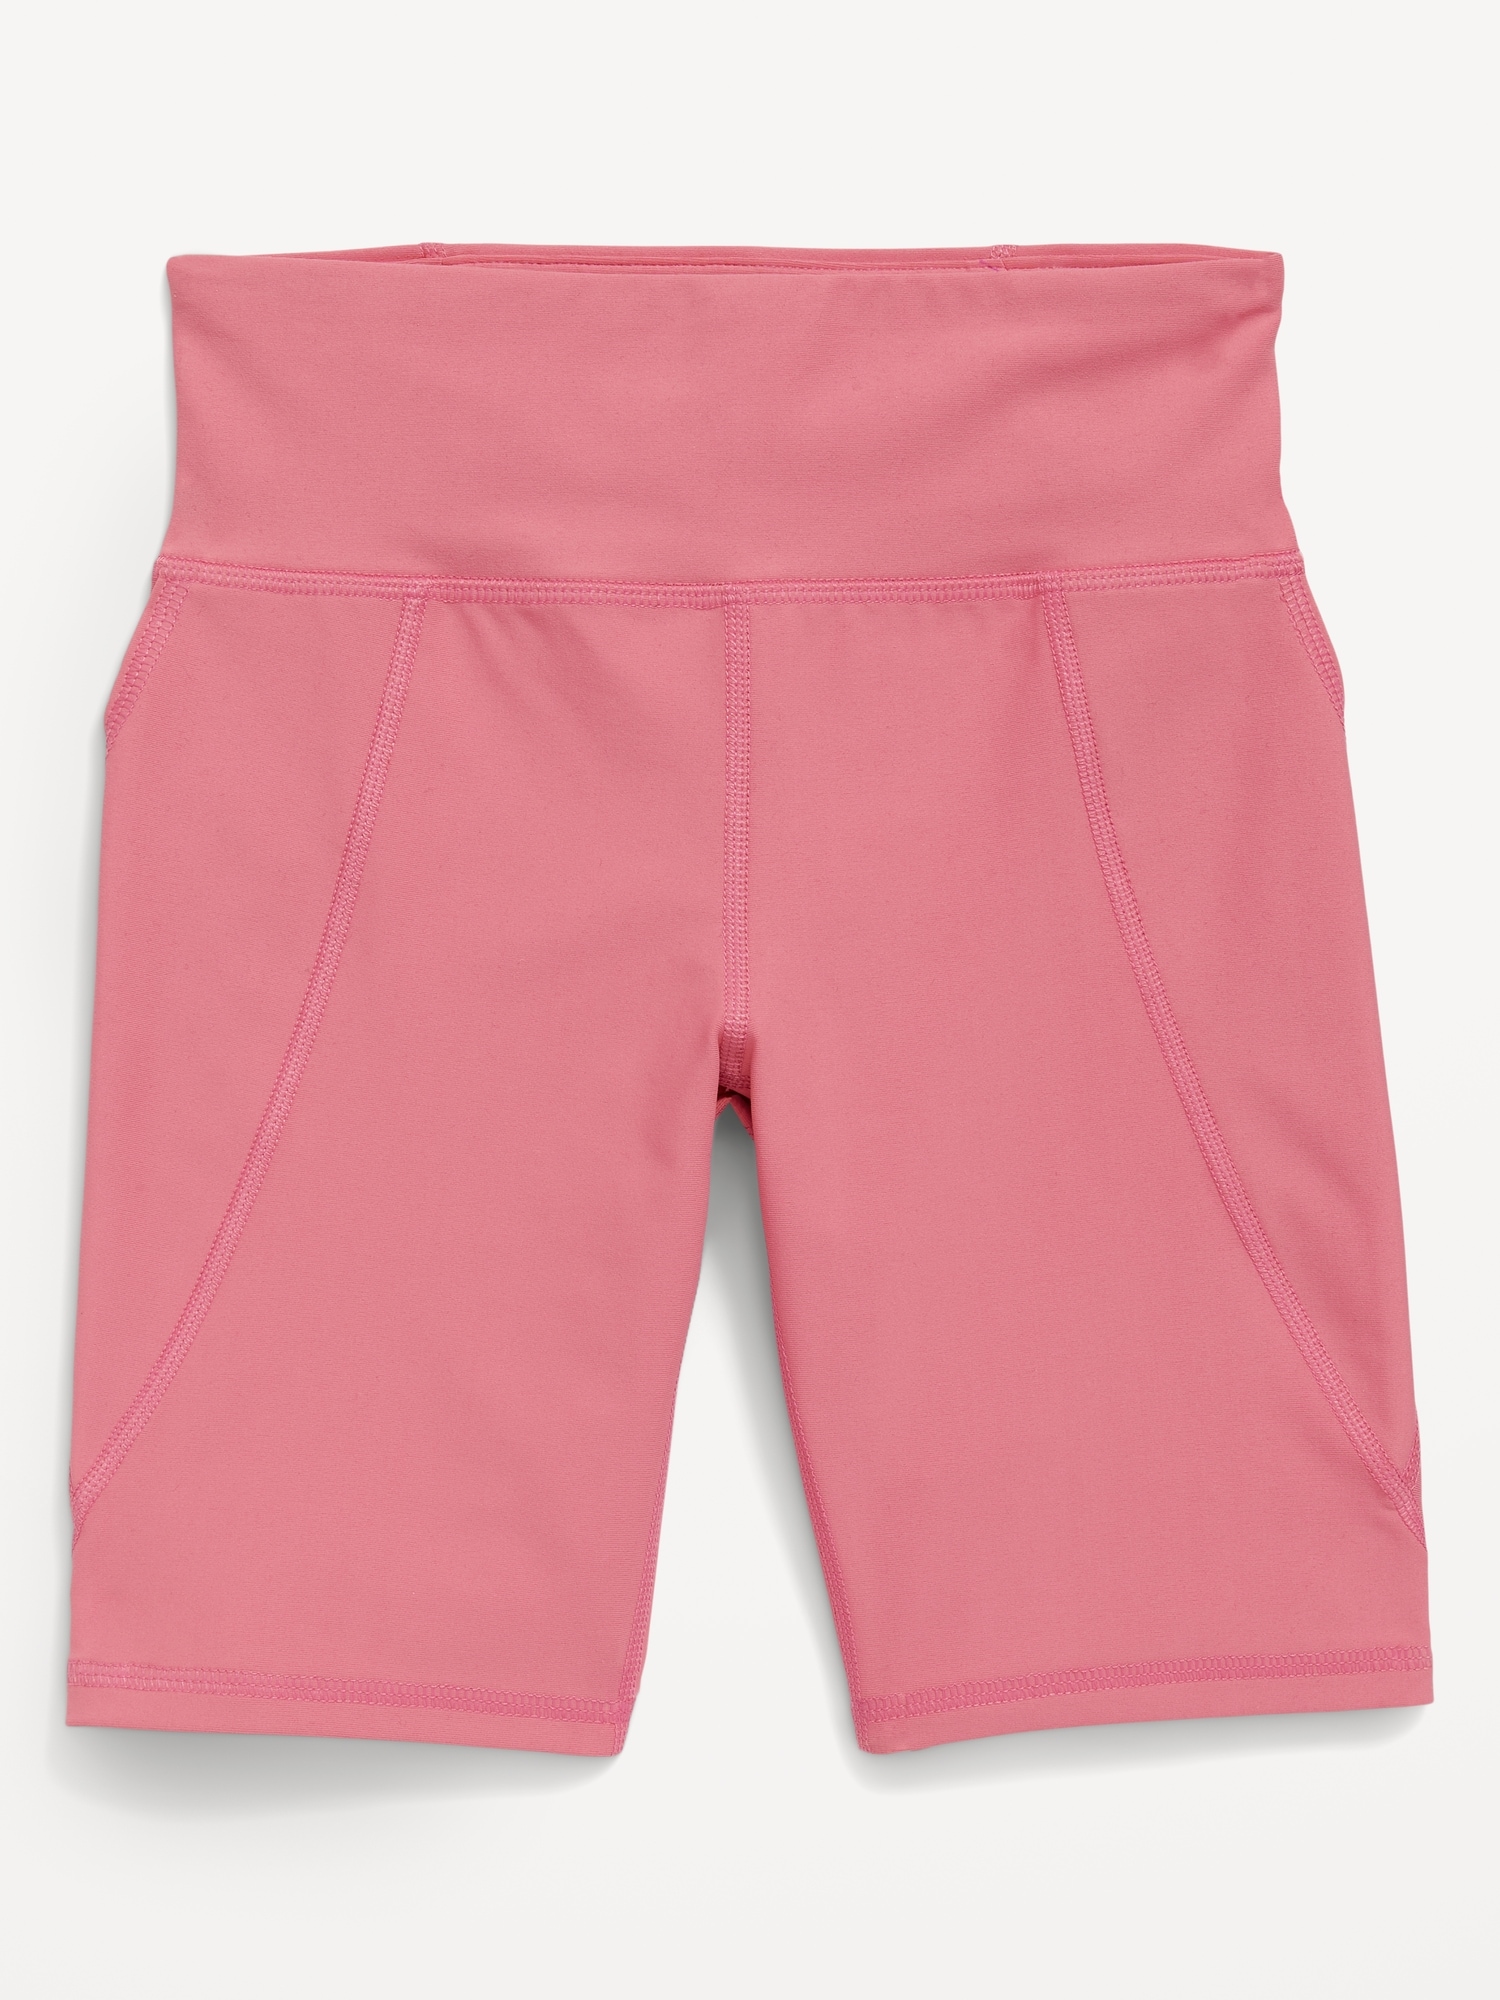 Old Navy High-Waisted PowerSoft Side-Pocket Biker Shorts for Girls pink. 1